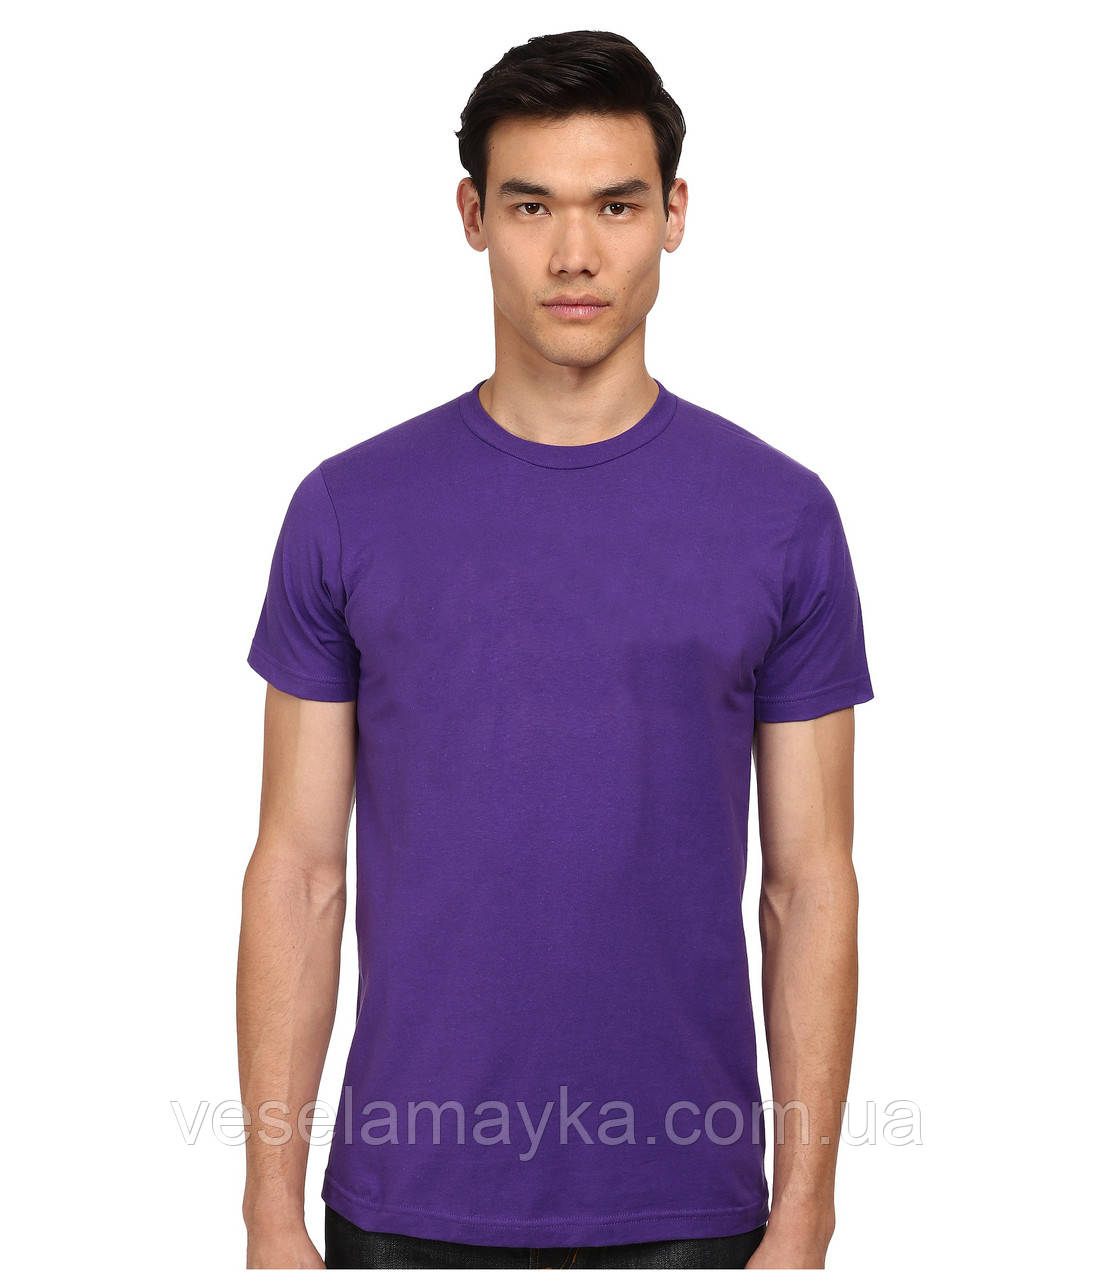 Фіолетова чоловіча футболка (Комфорт)